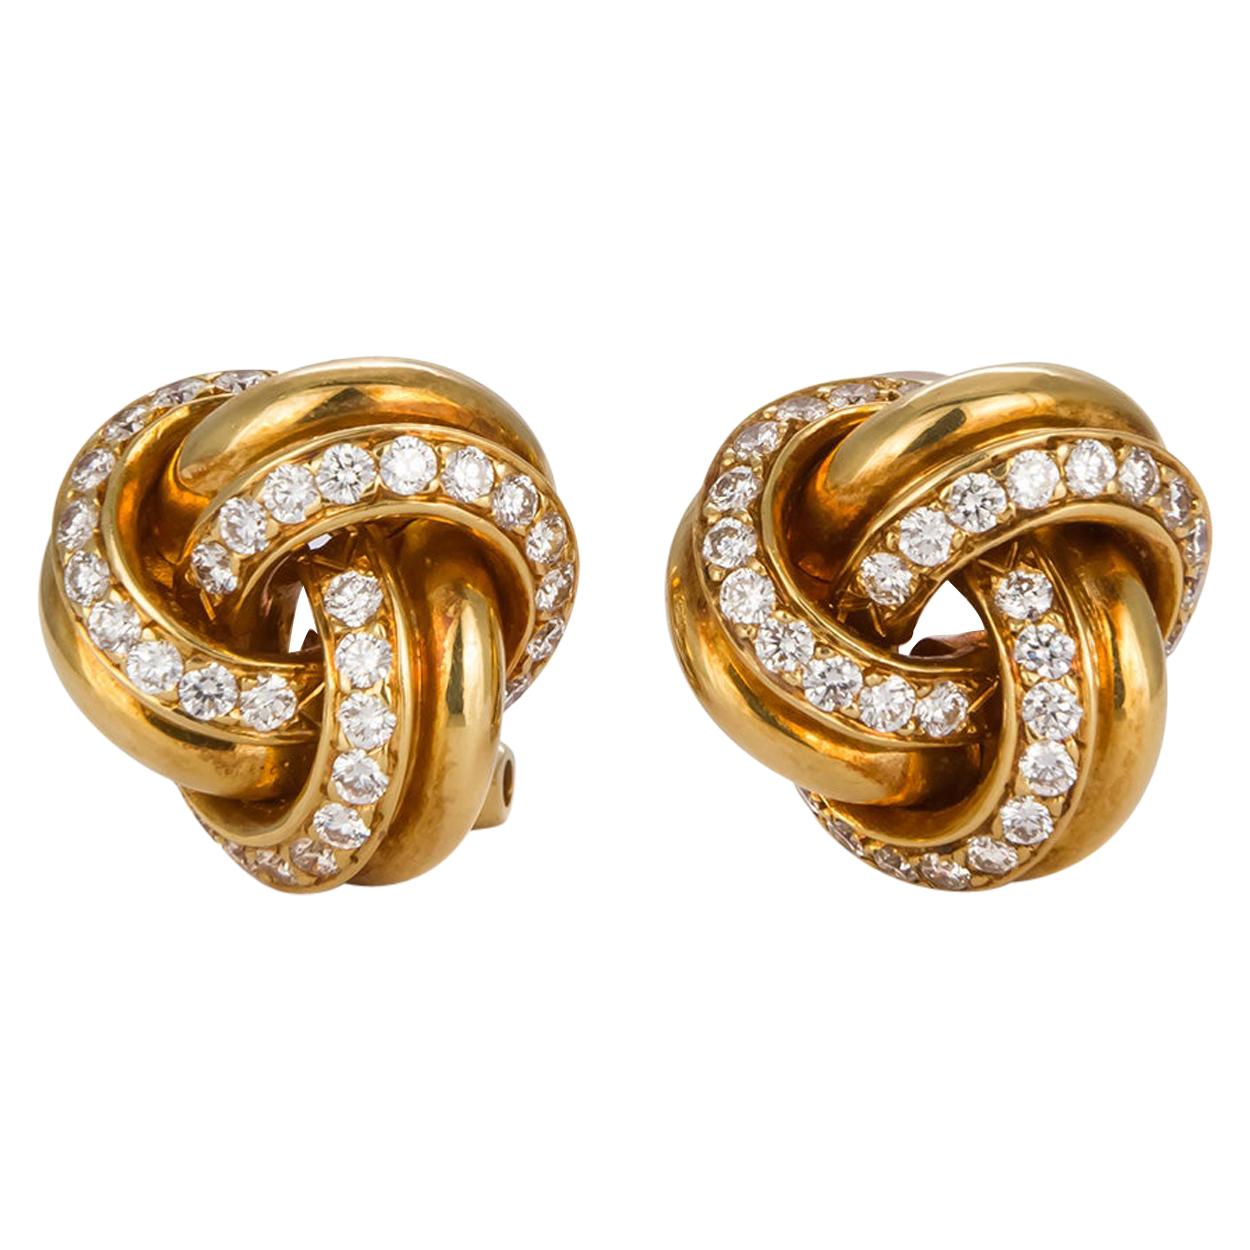 Tiffany & Co. 18 Karat Yellow Gold and Diamond Love Knot Earring Clips